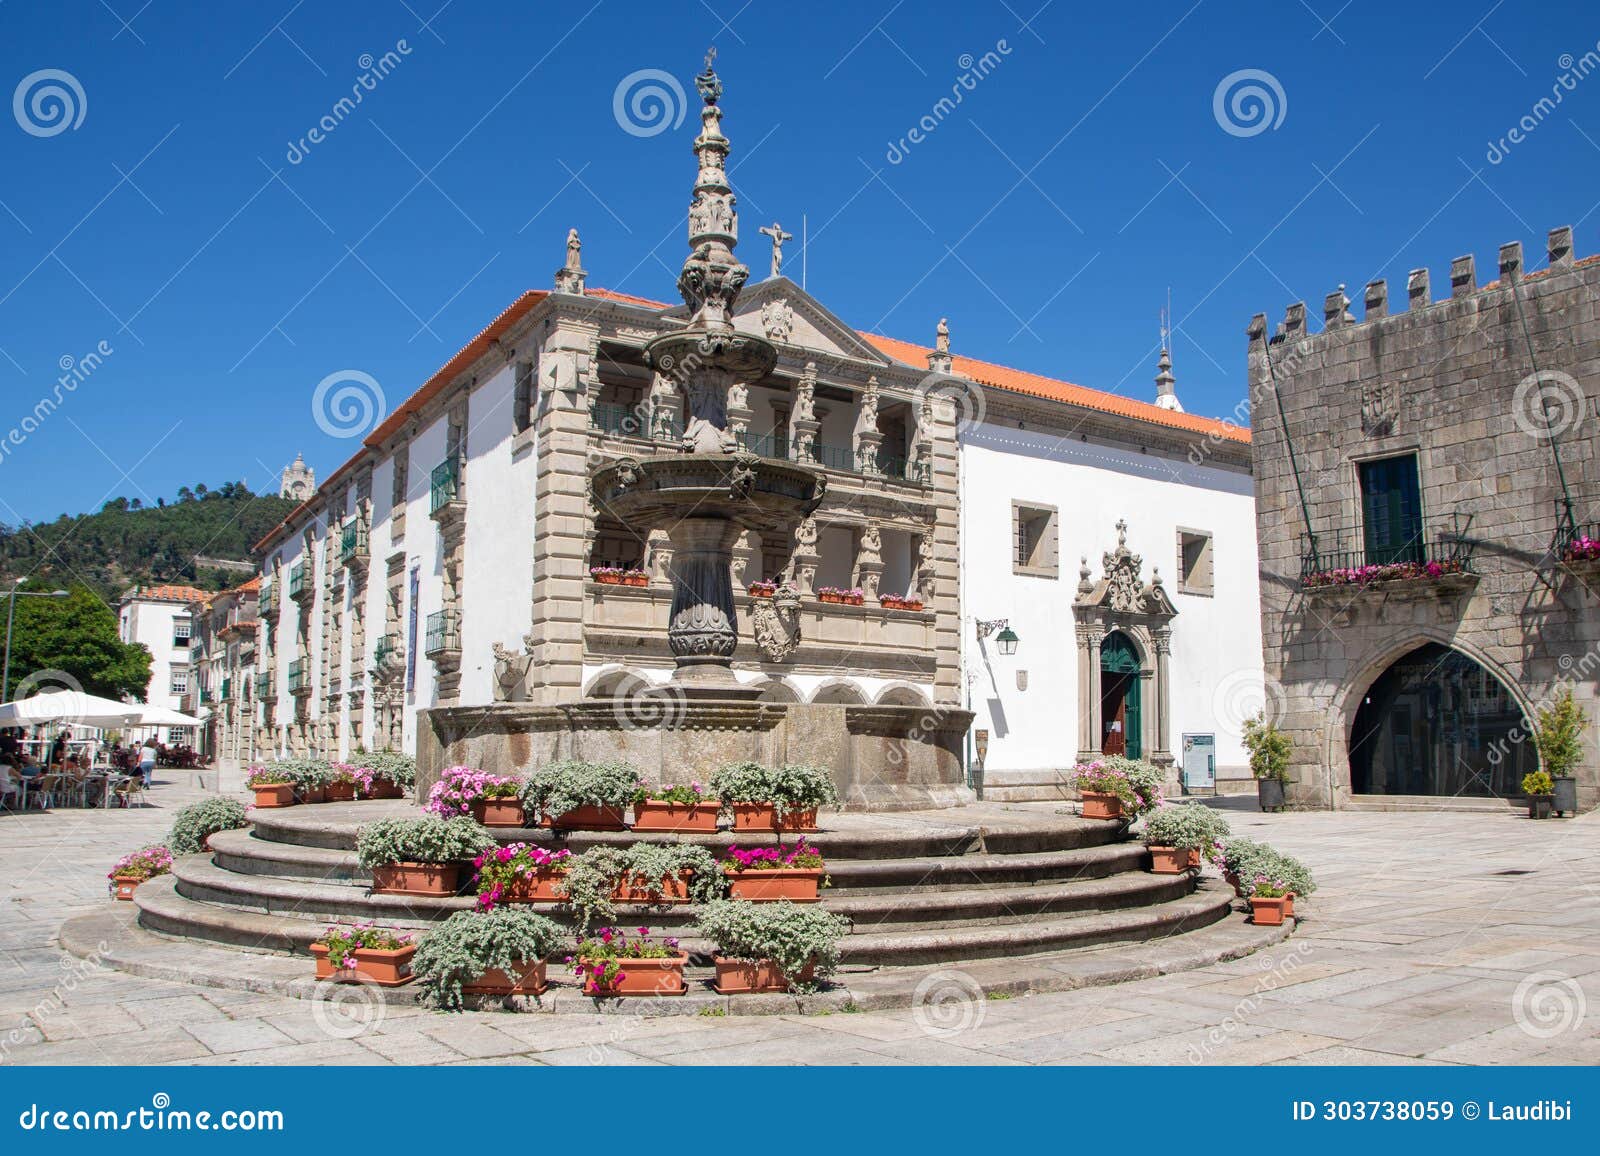 viana do castelo in the north of portugal